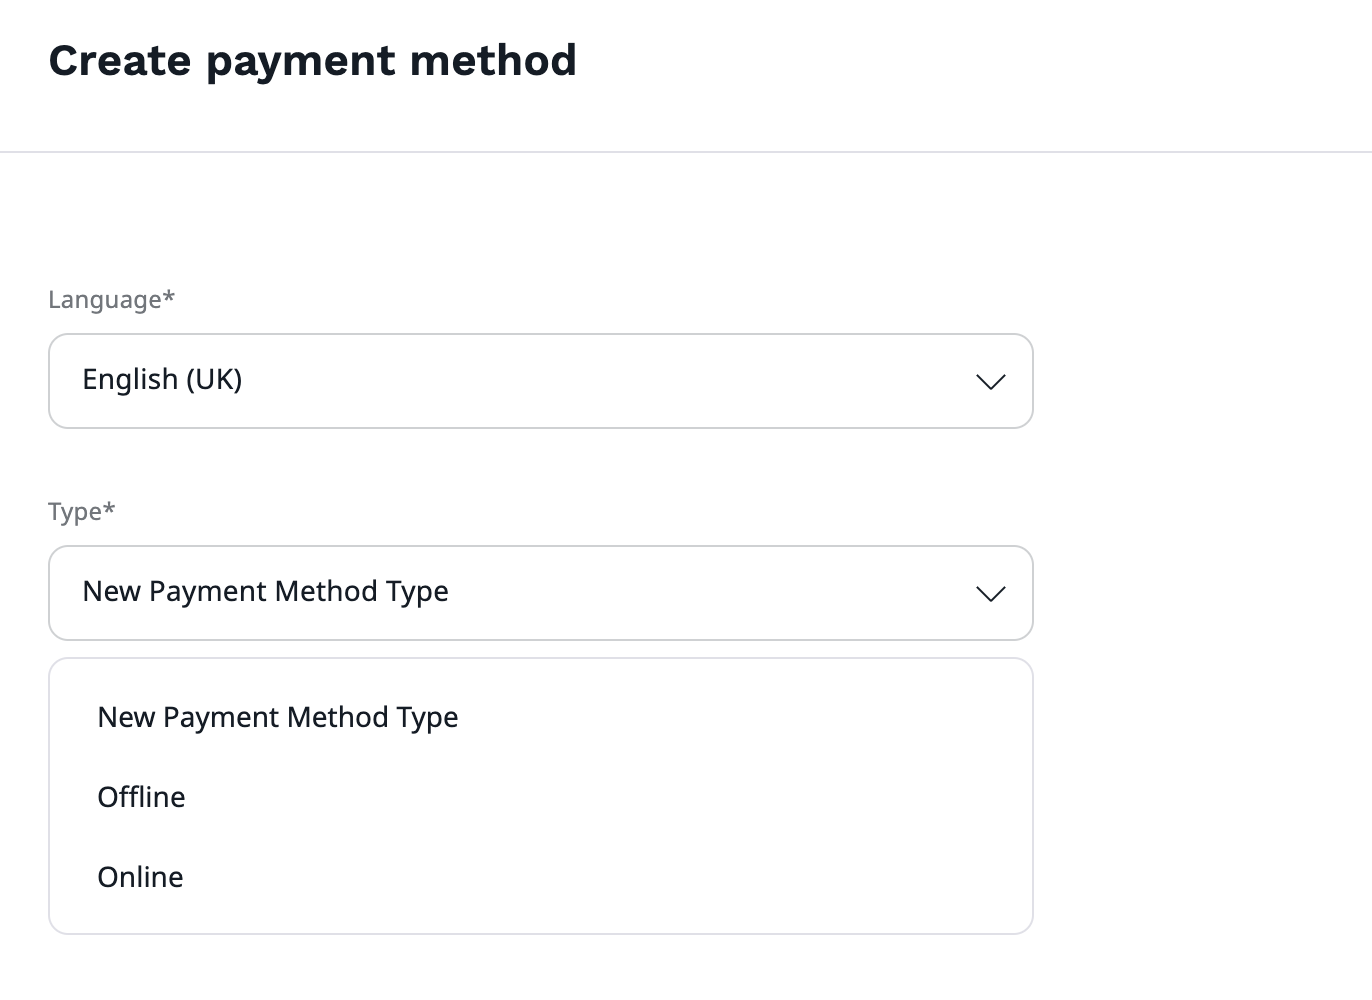 New payment method type